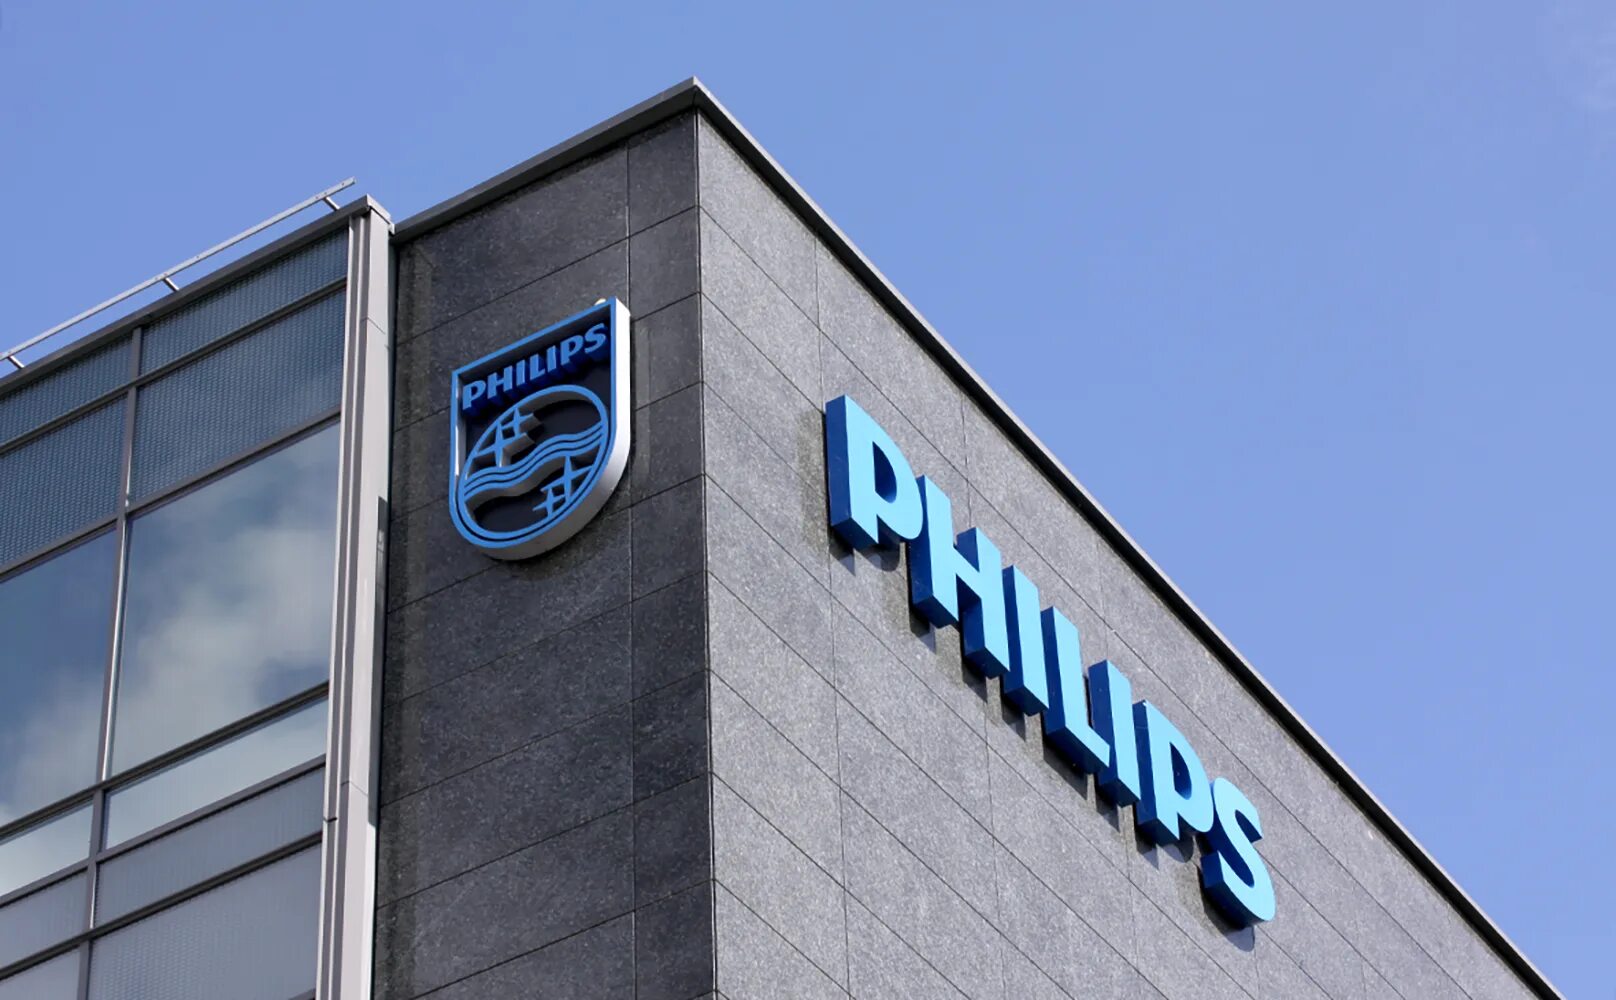 Компания Филипс Нидерланды. Royal Philips Electronics. Philips штаб квартира. Филипс здание.